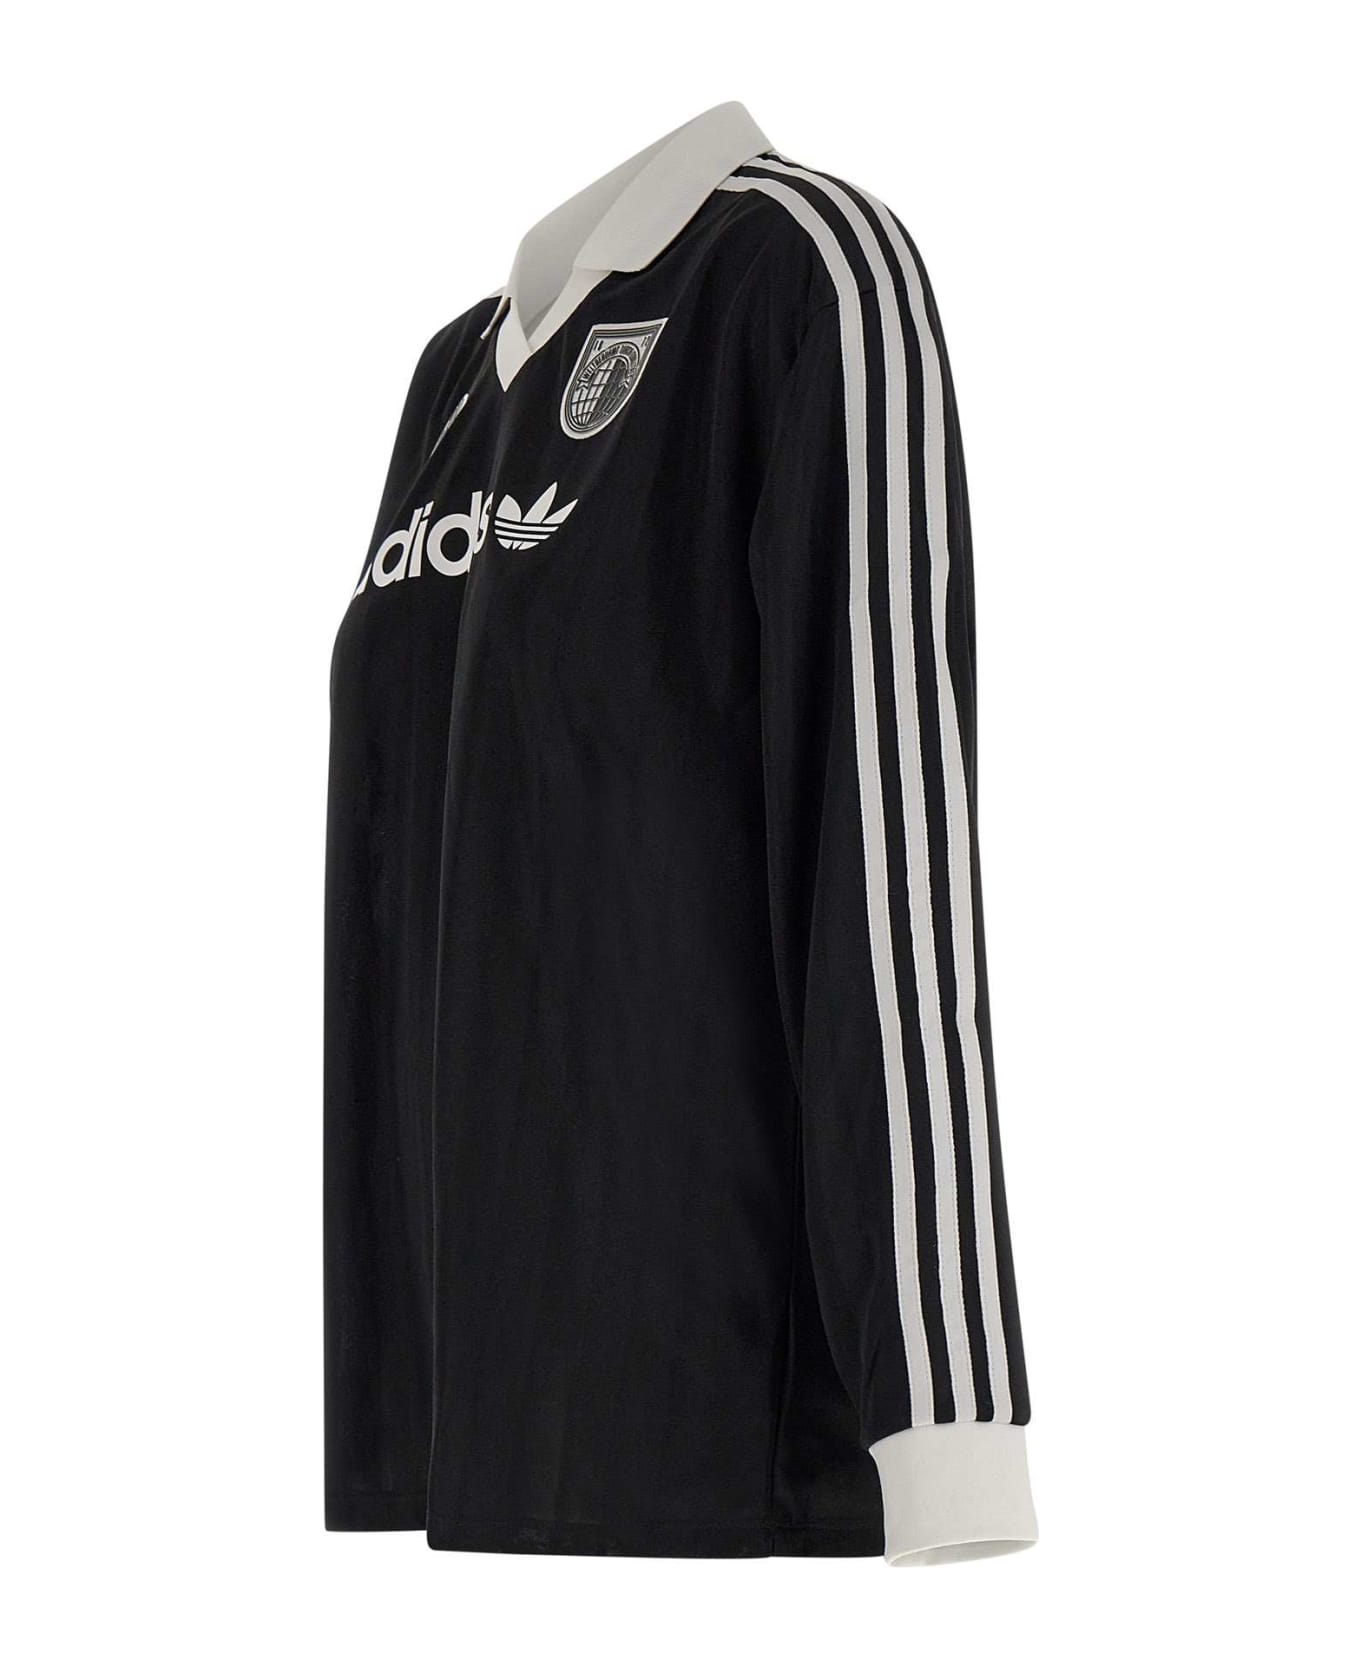 Adidas "soccer Ls" Sweater - BLACK